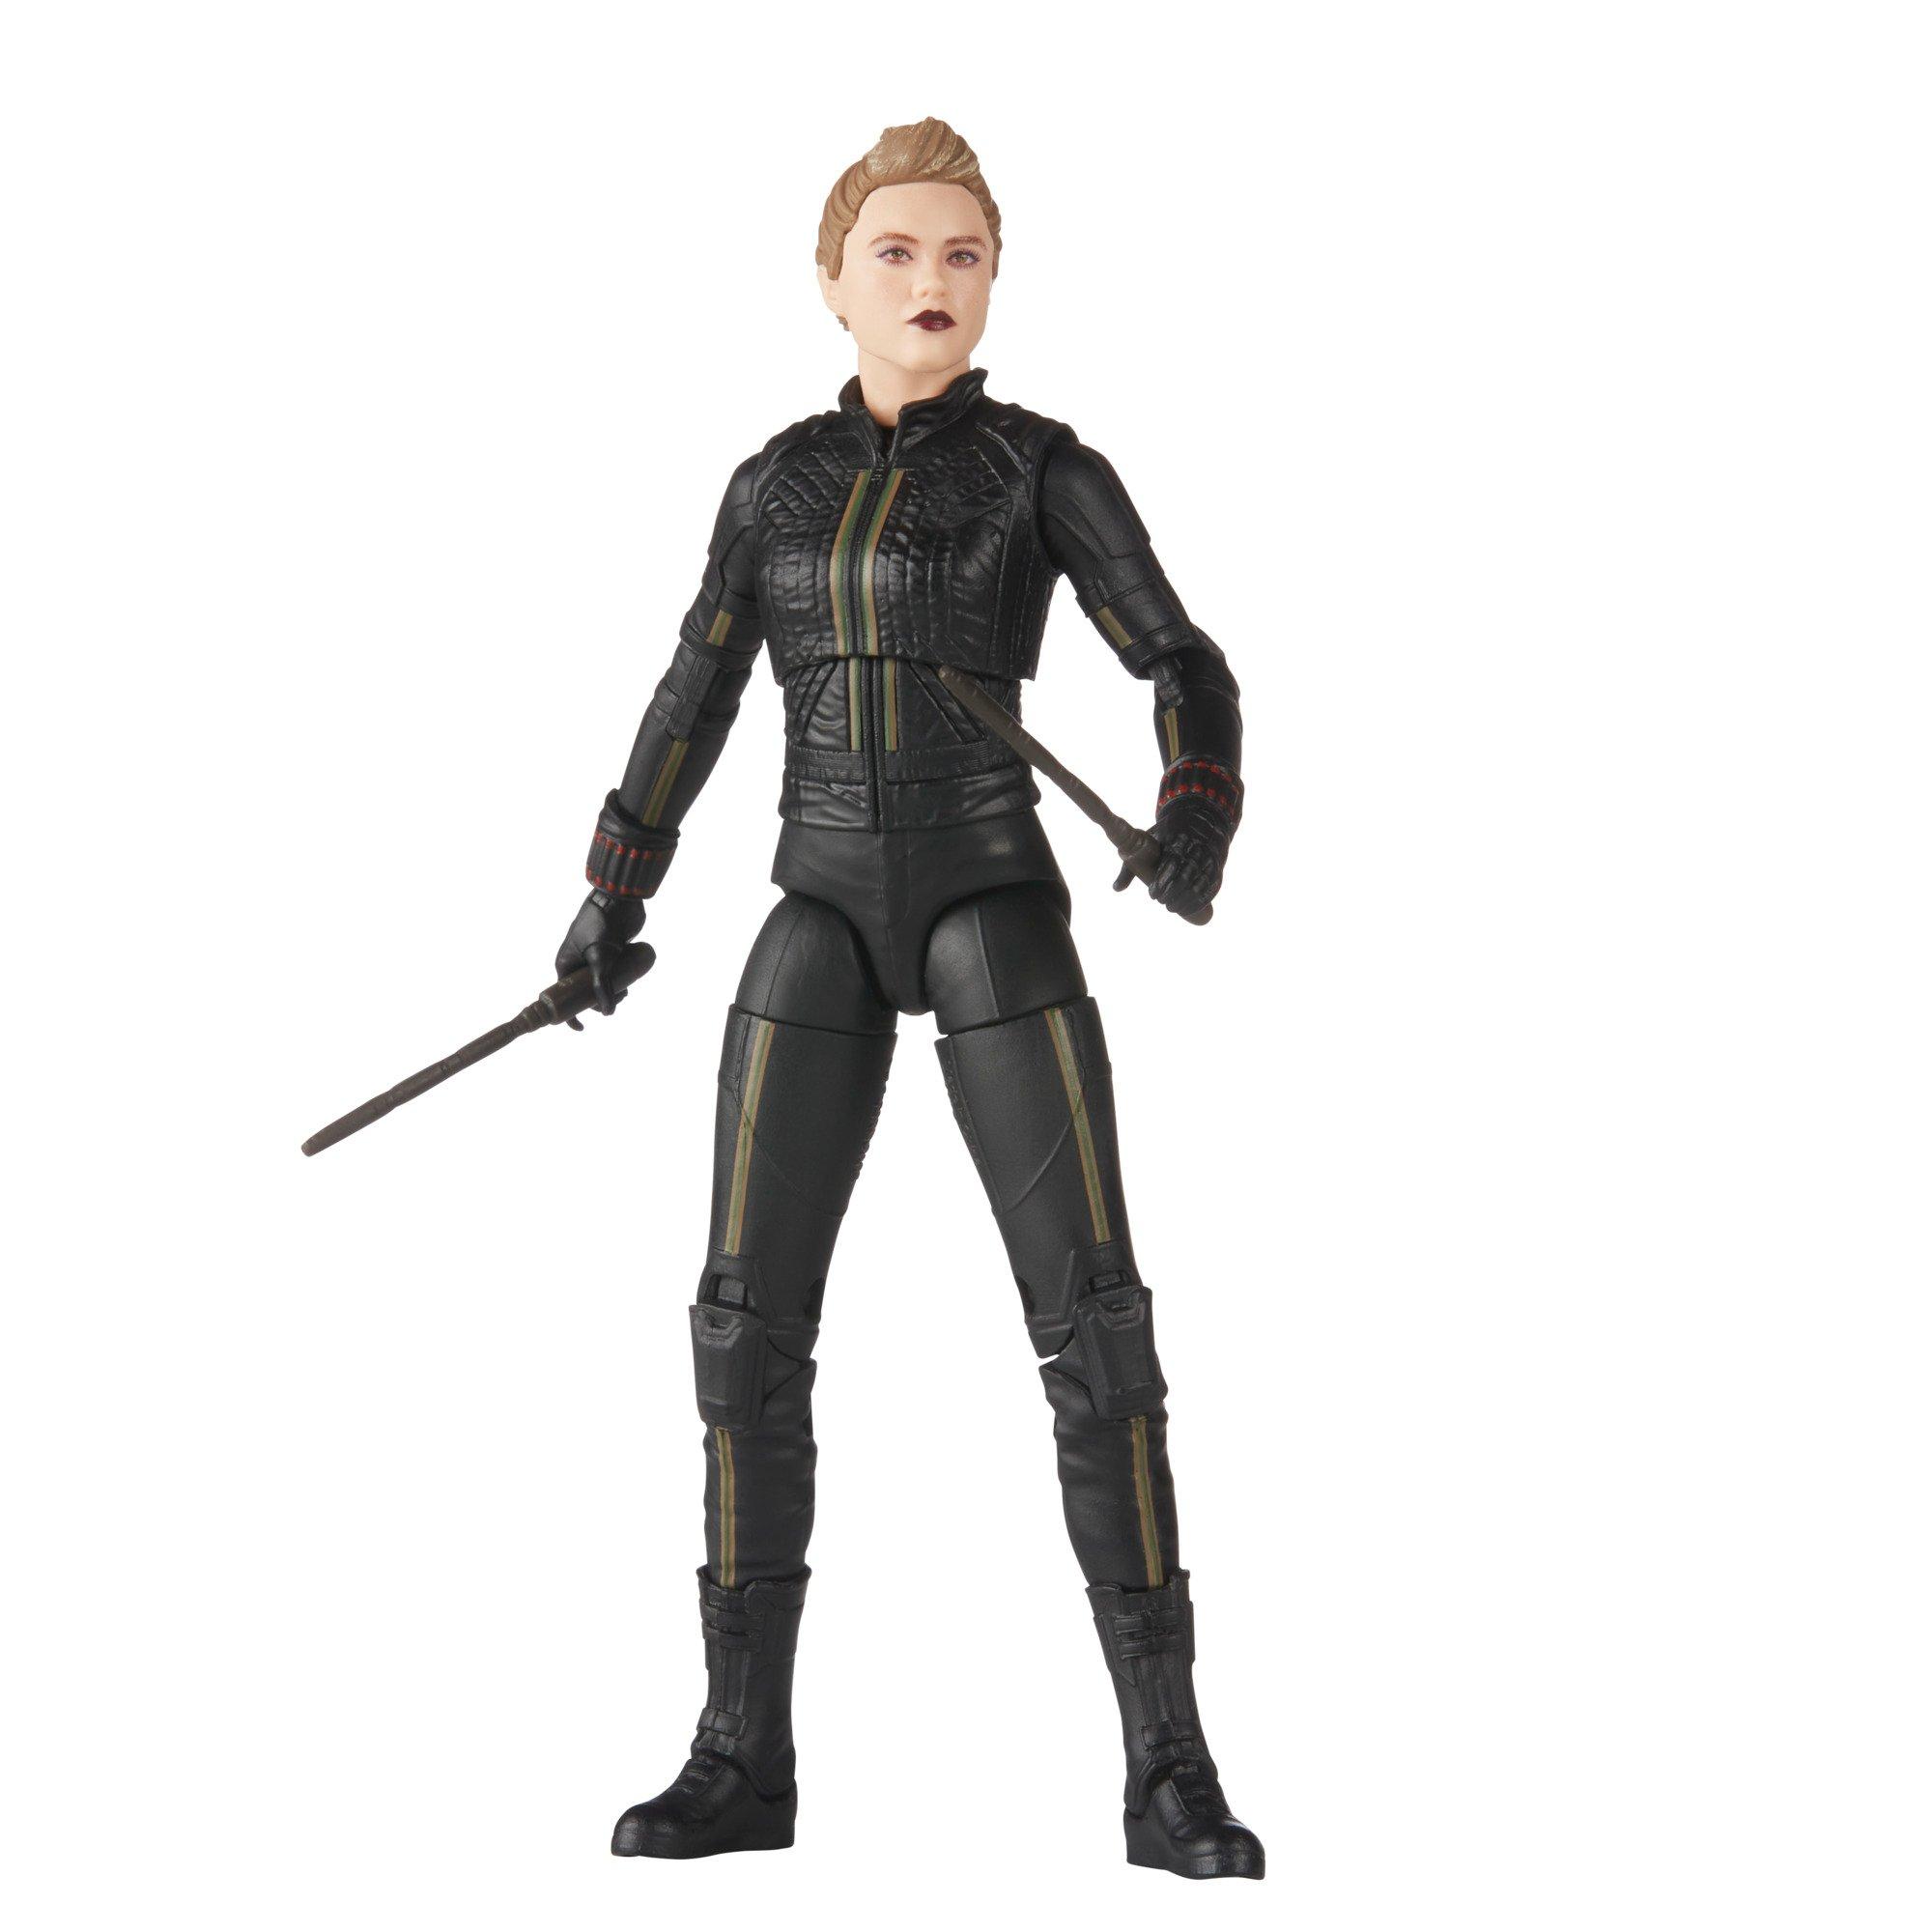 Buy Marvel Avengers Legends Series 6-inch Black Widow Online at